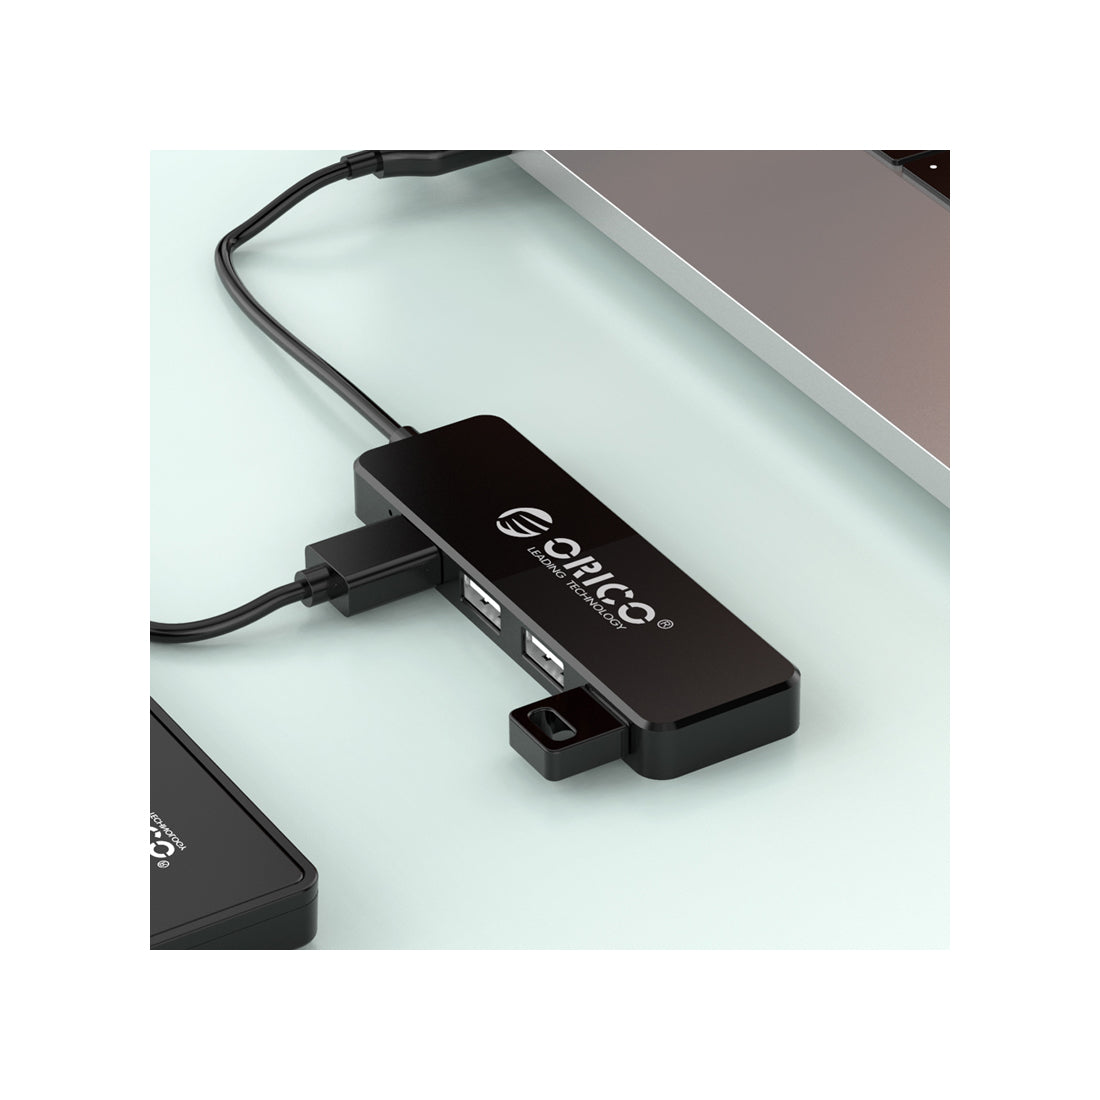 ORICO FL01 4-Port USB 2.0 HUB with 480Mbps Transmission Speed